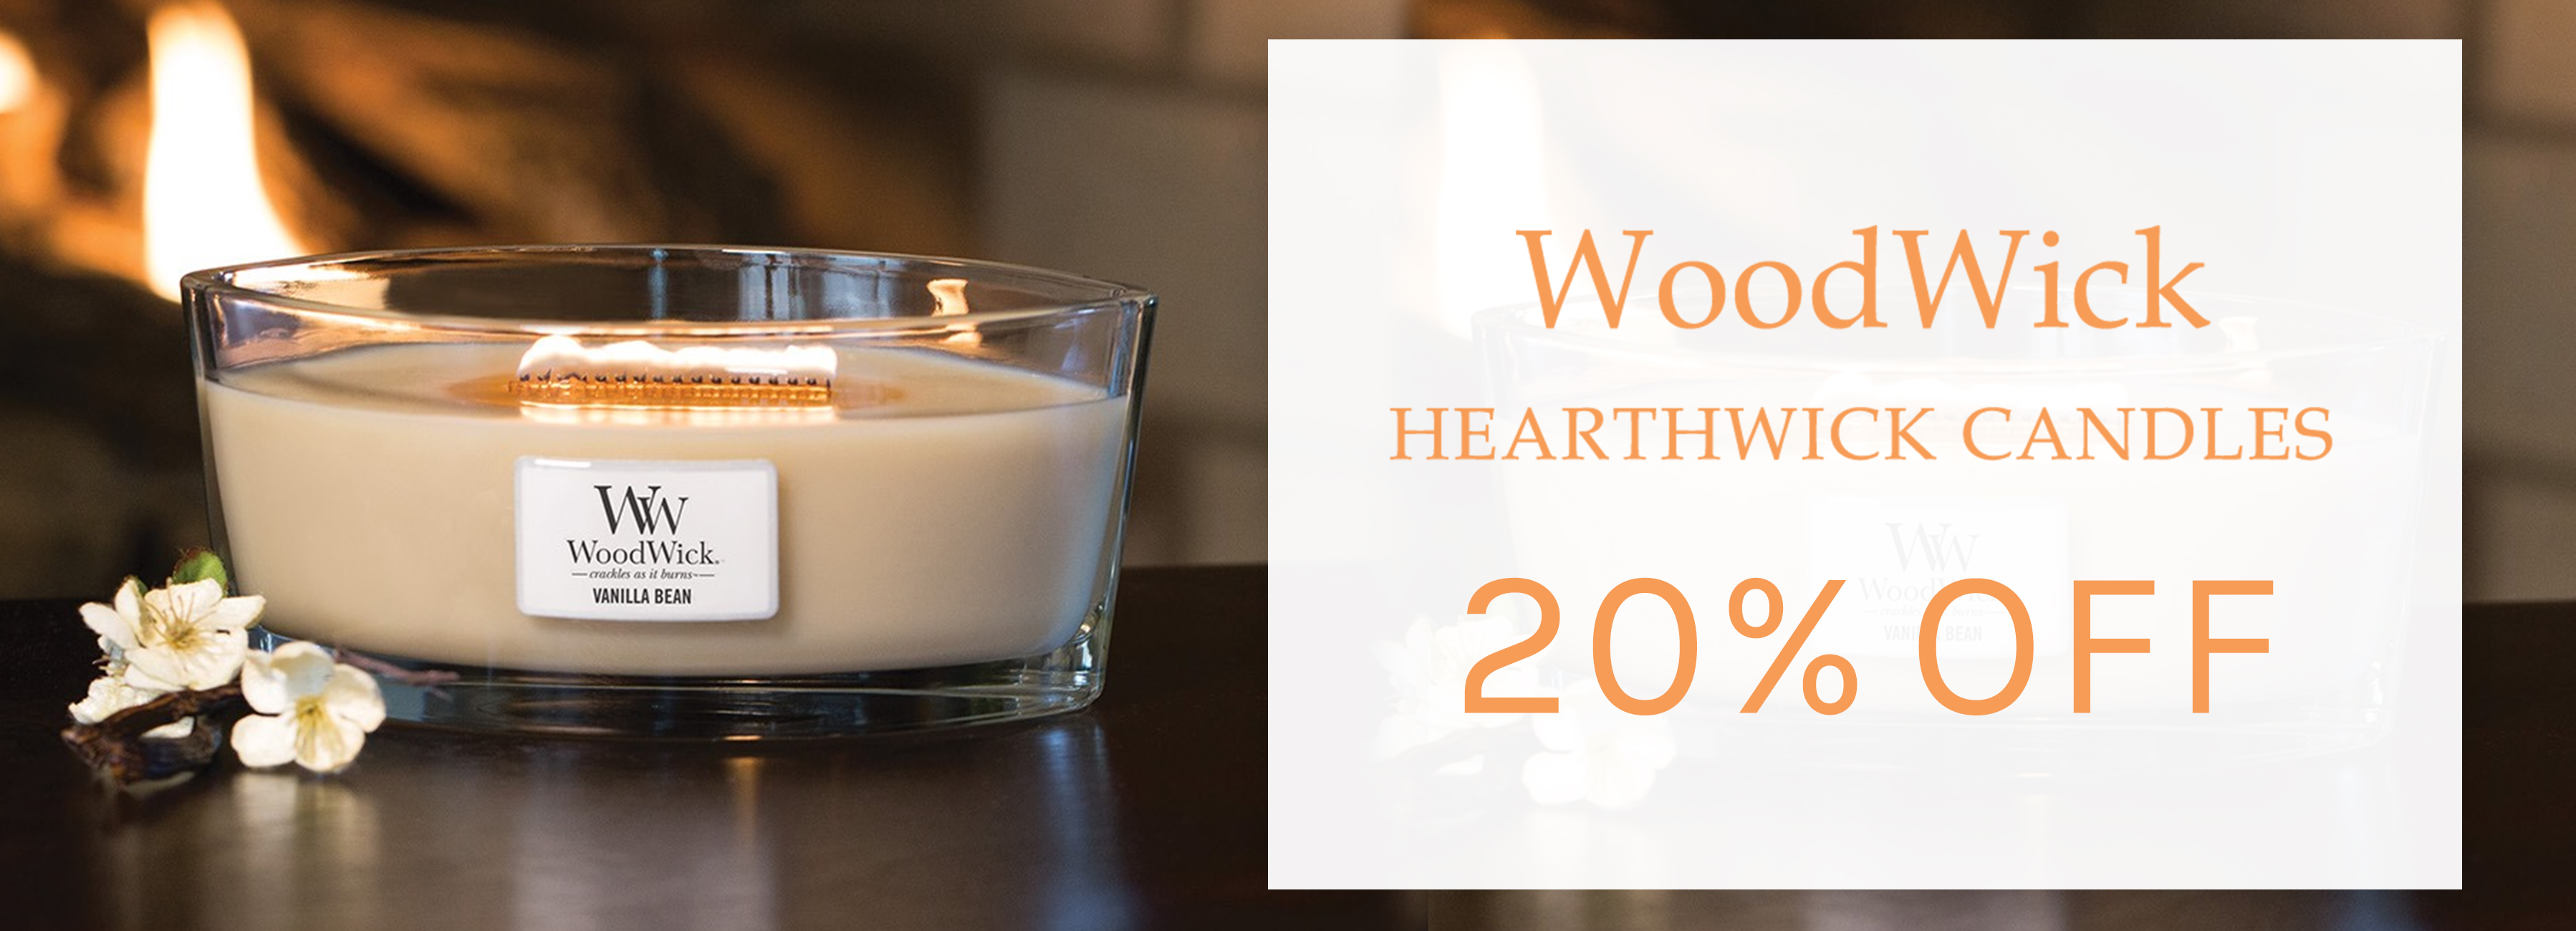 WoodWick - Hearthwick-15 Percent OFF